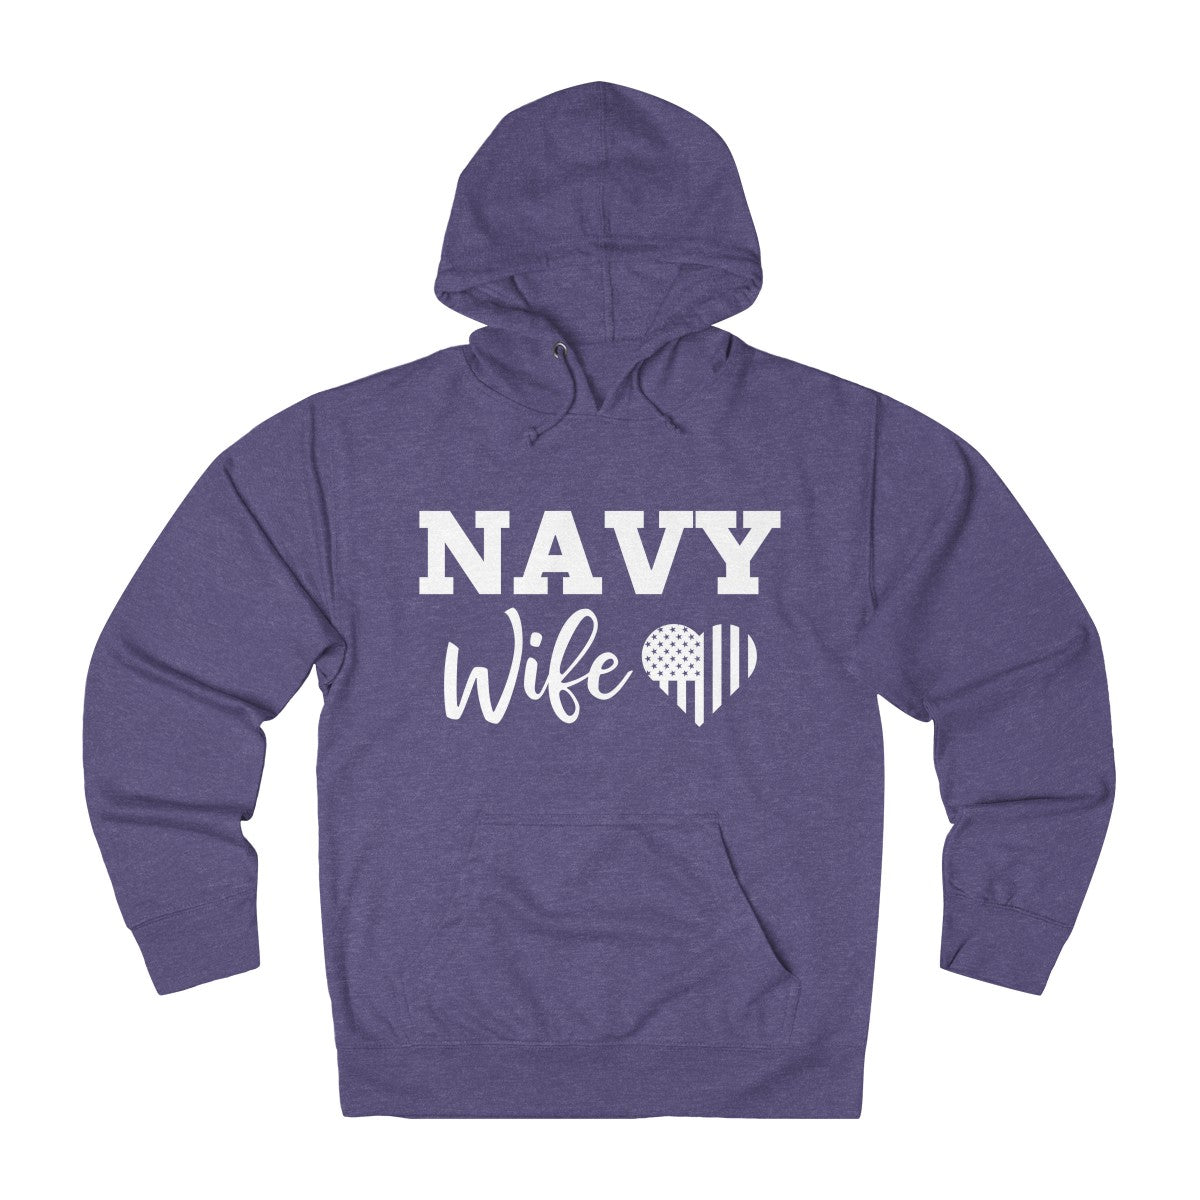 tommy hilfiger navy sweatshirt womens